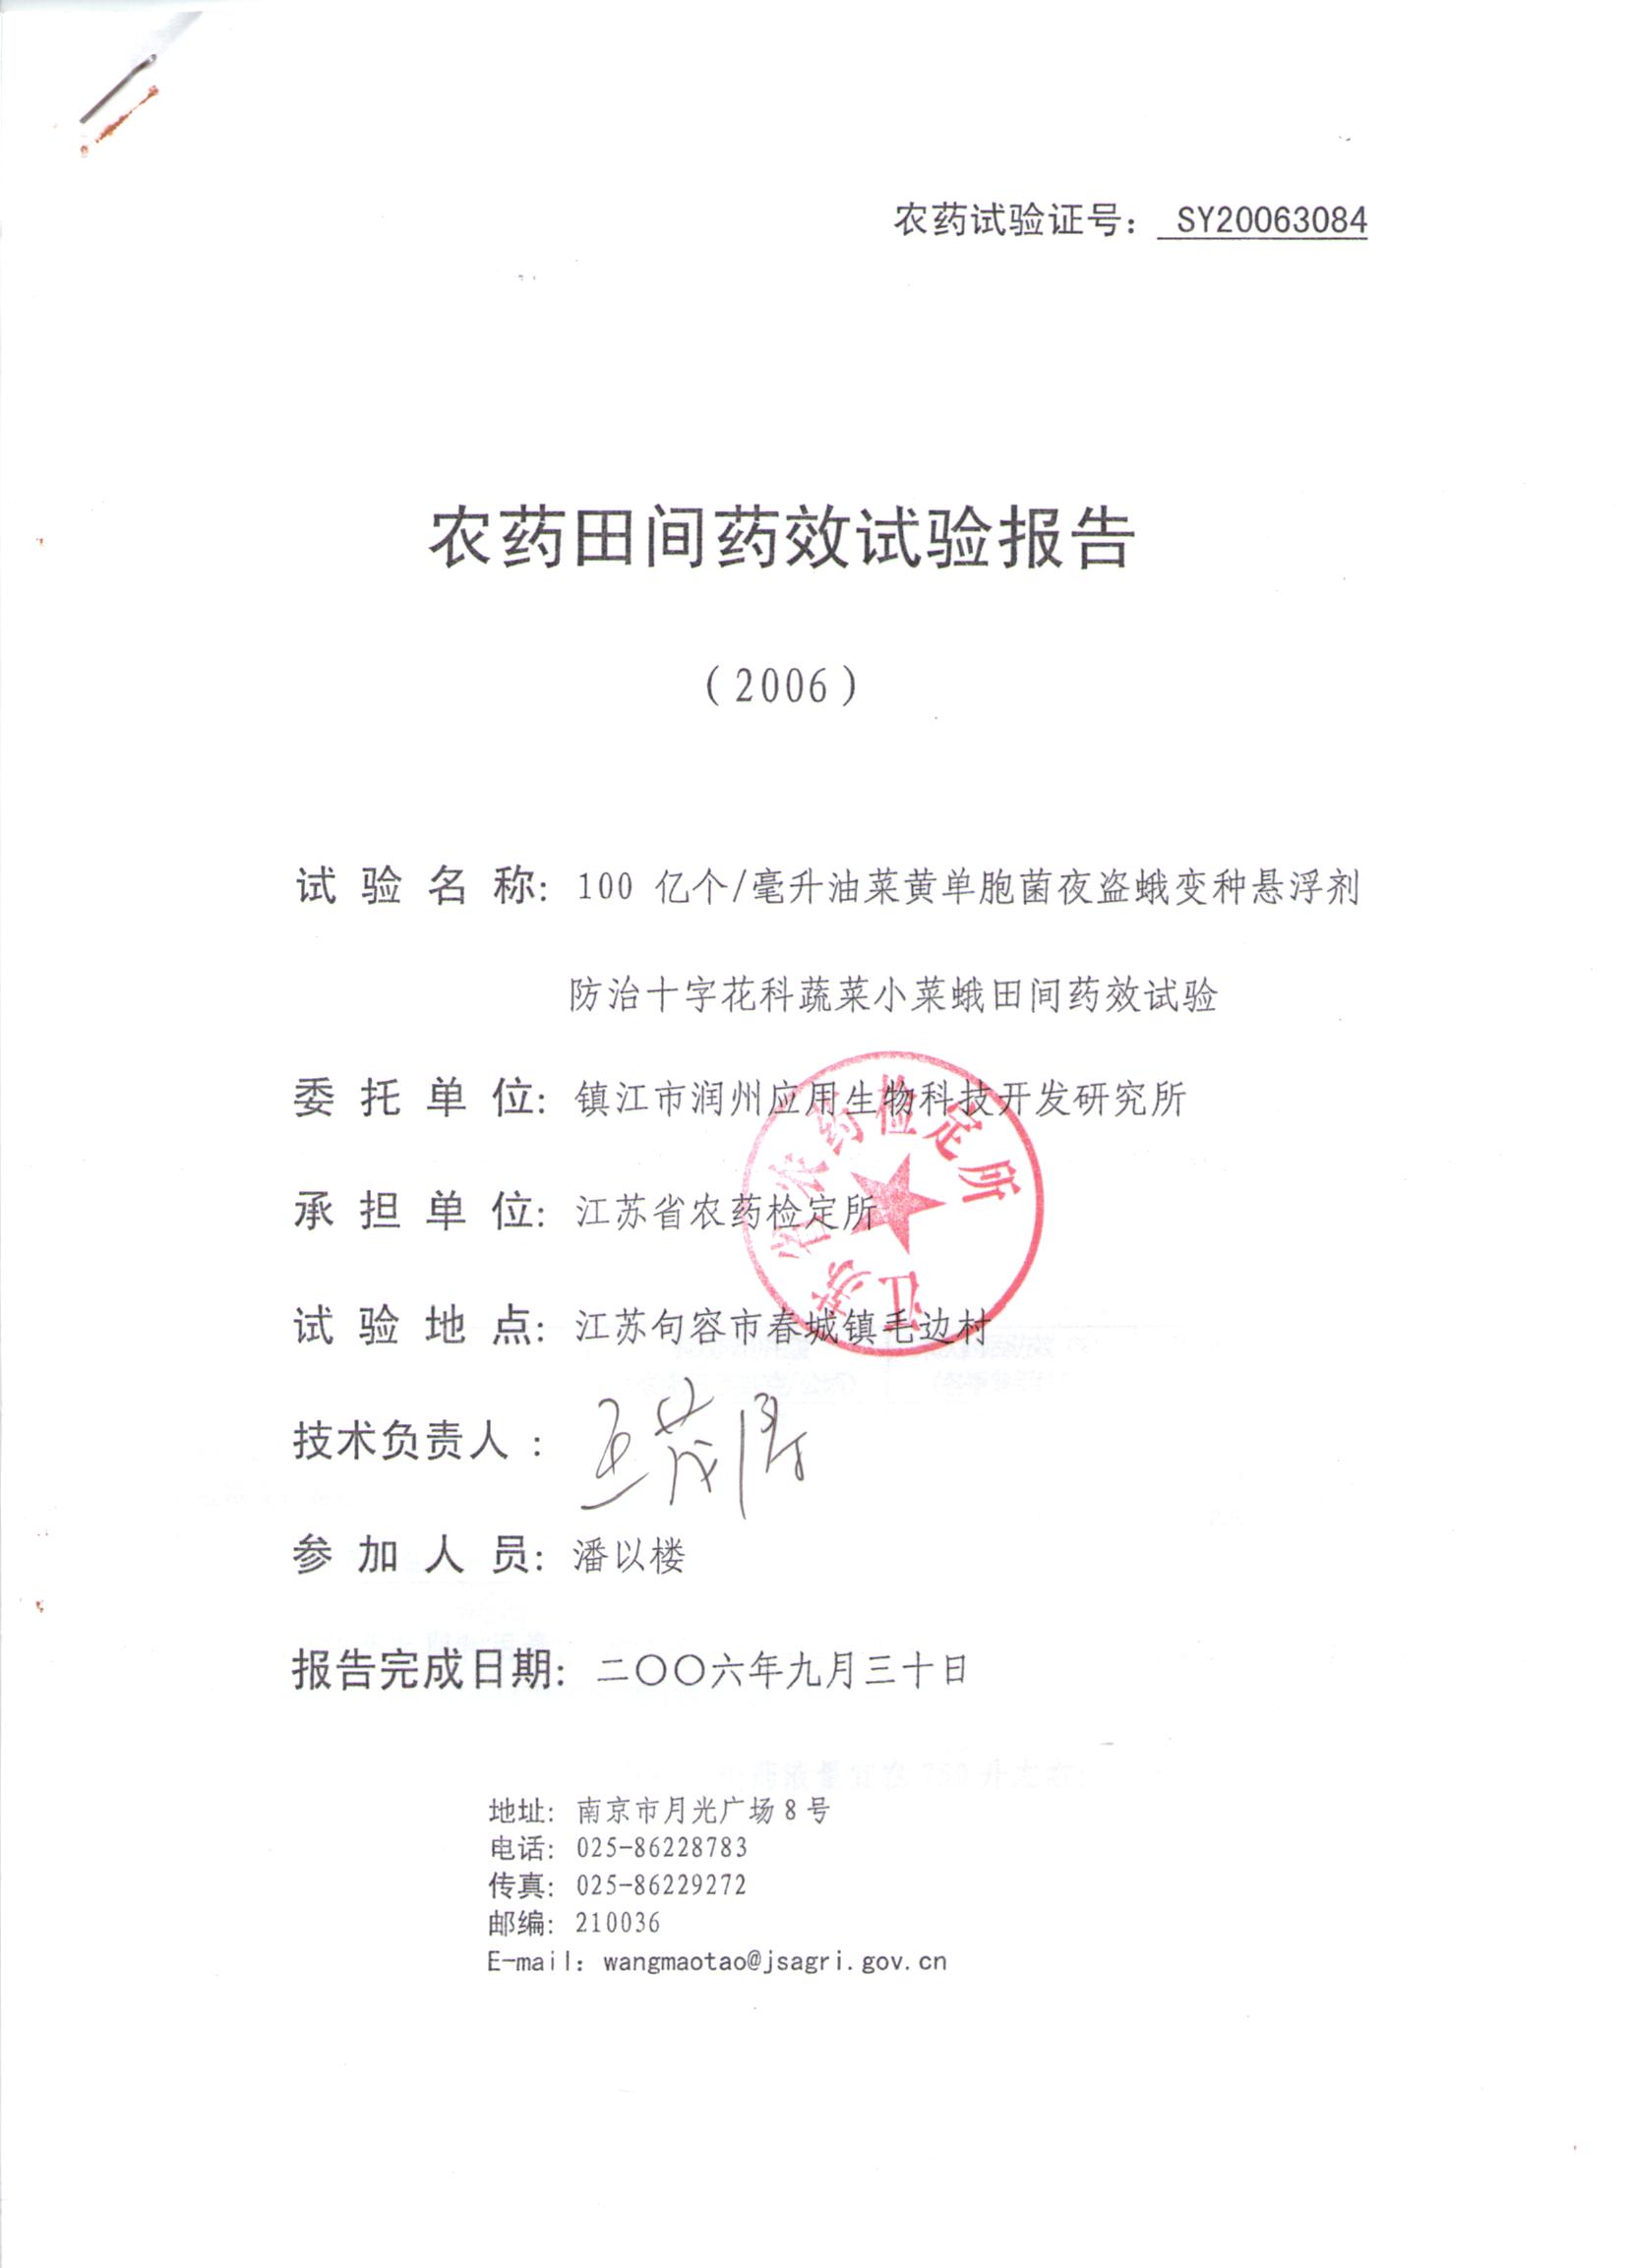 Test by institute of agricultureprc of Jiangsu.